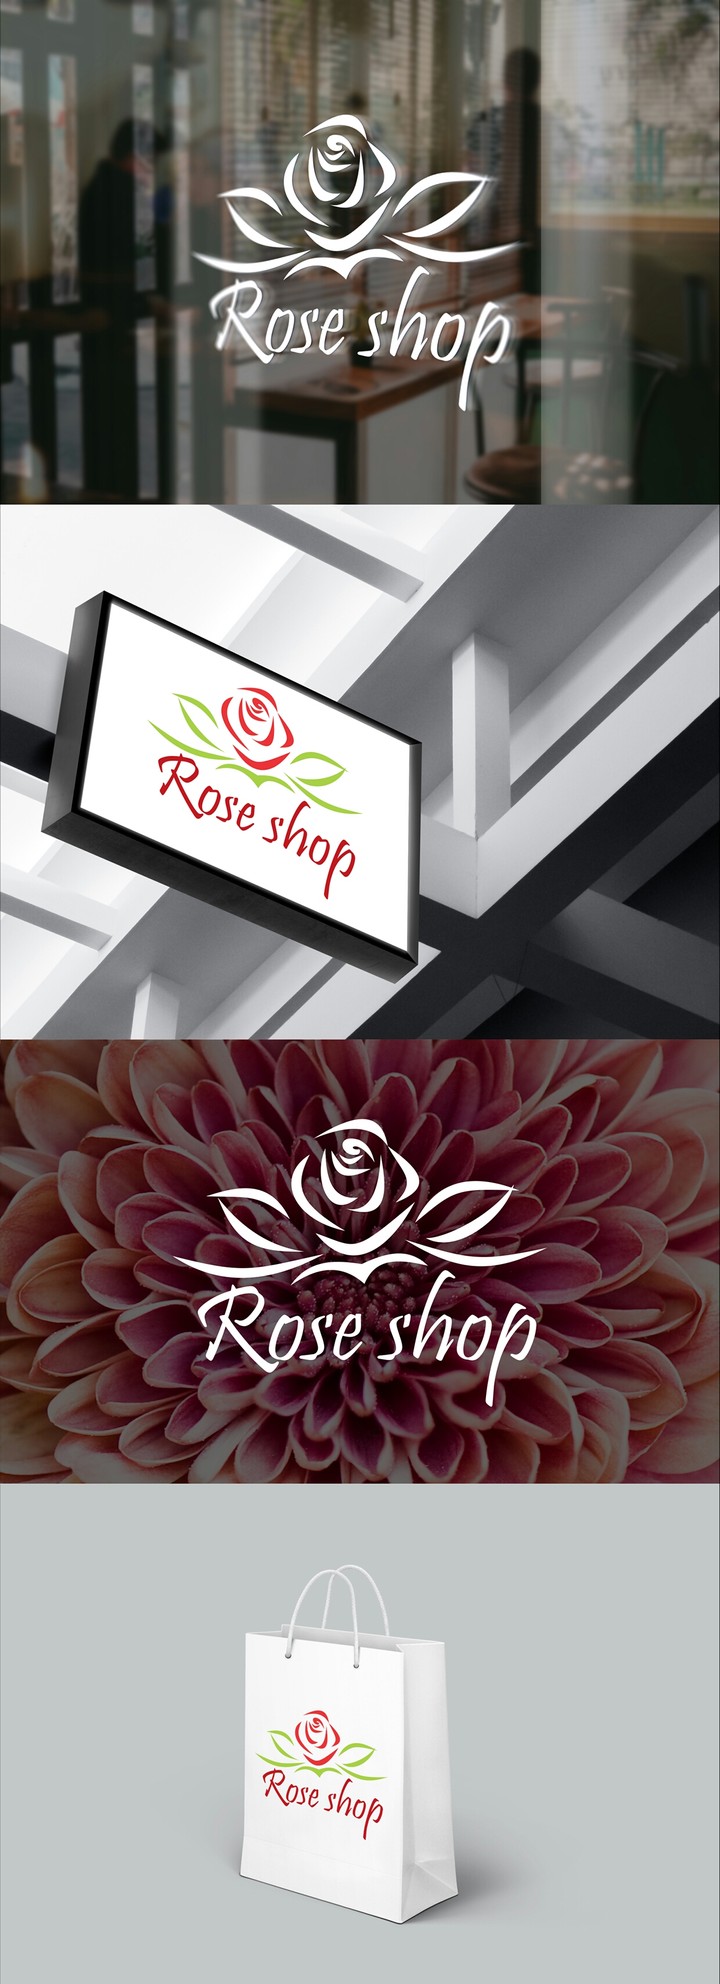 تصميم شعار  و بزنس كارد Rose Shop